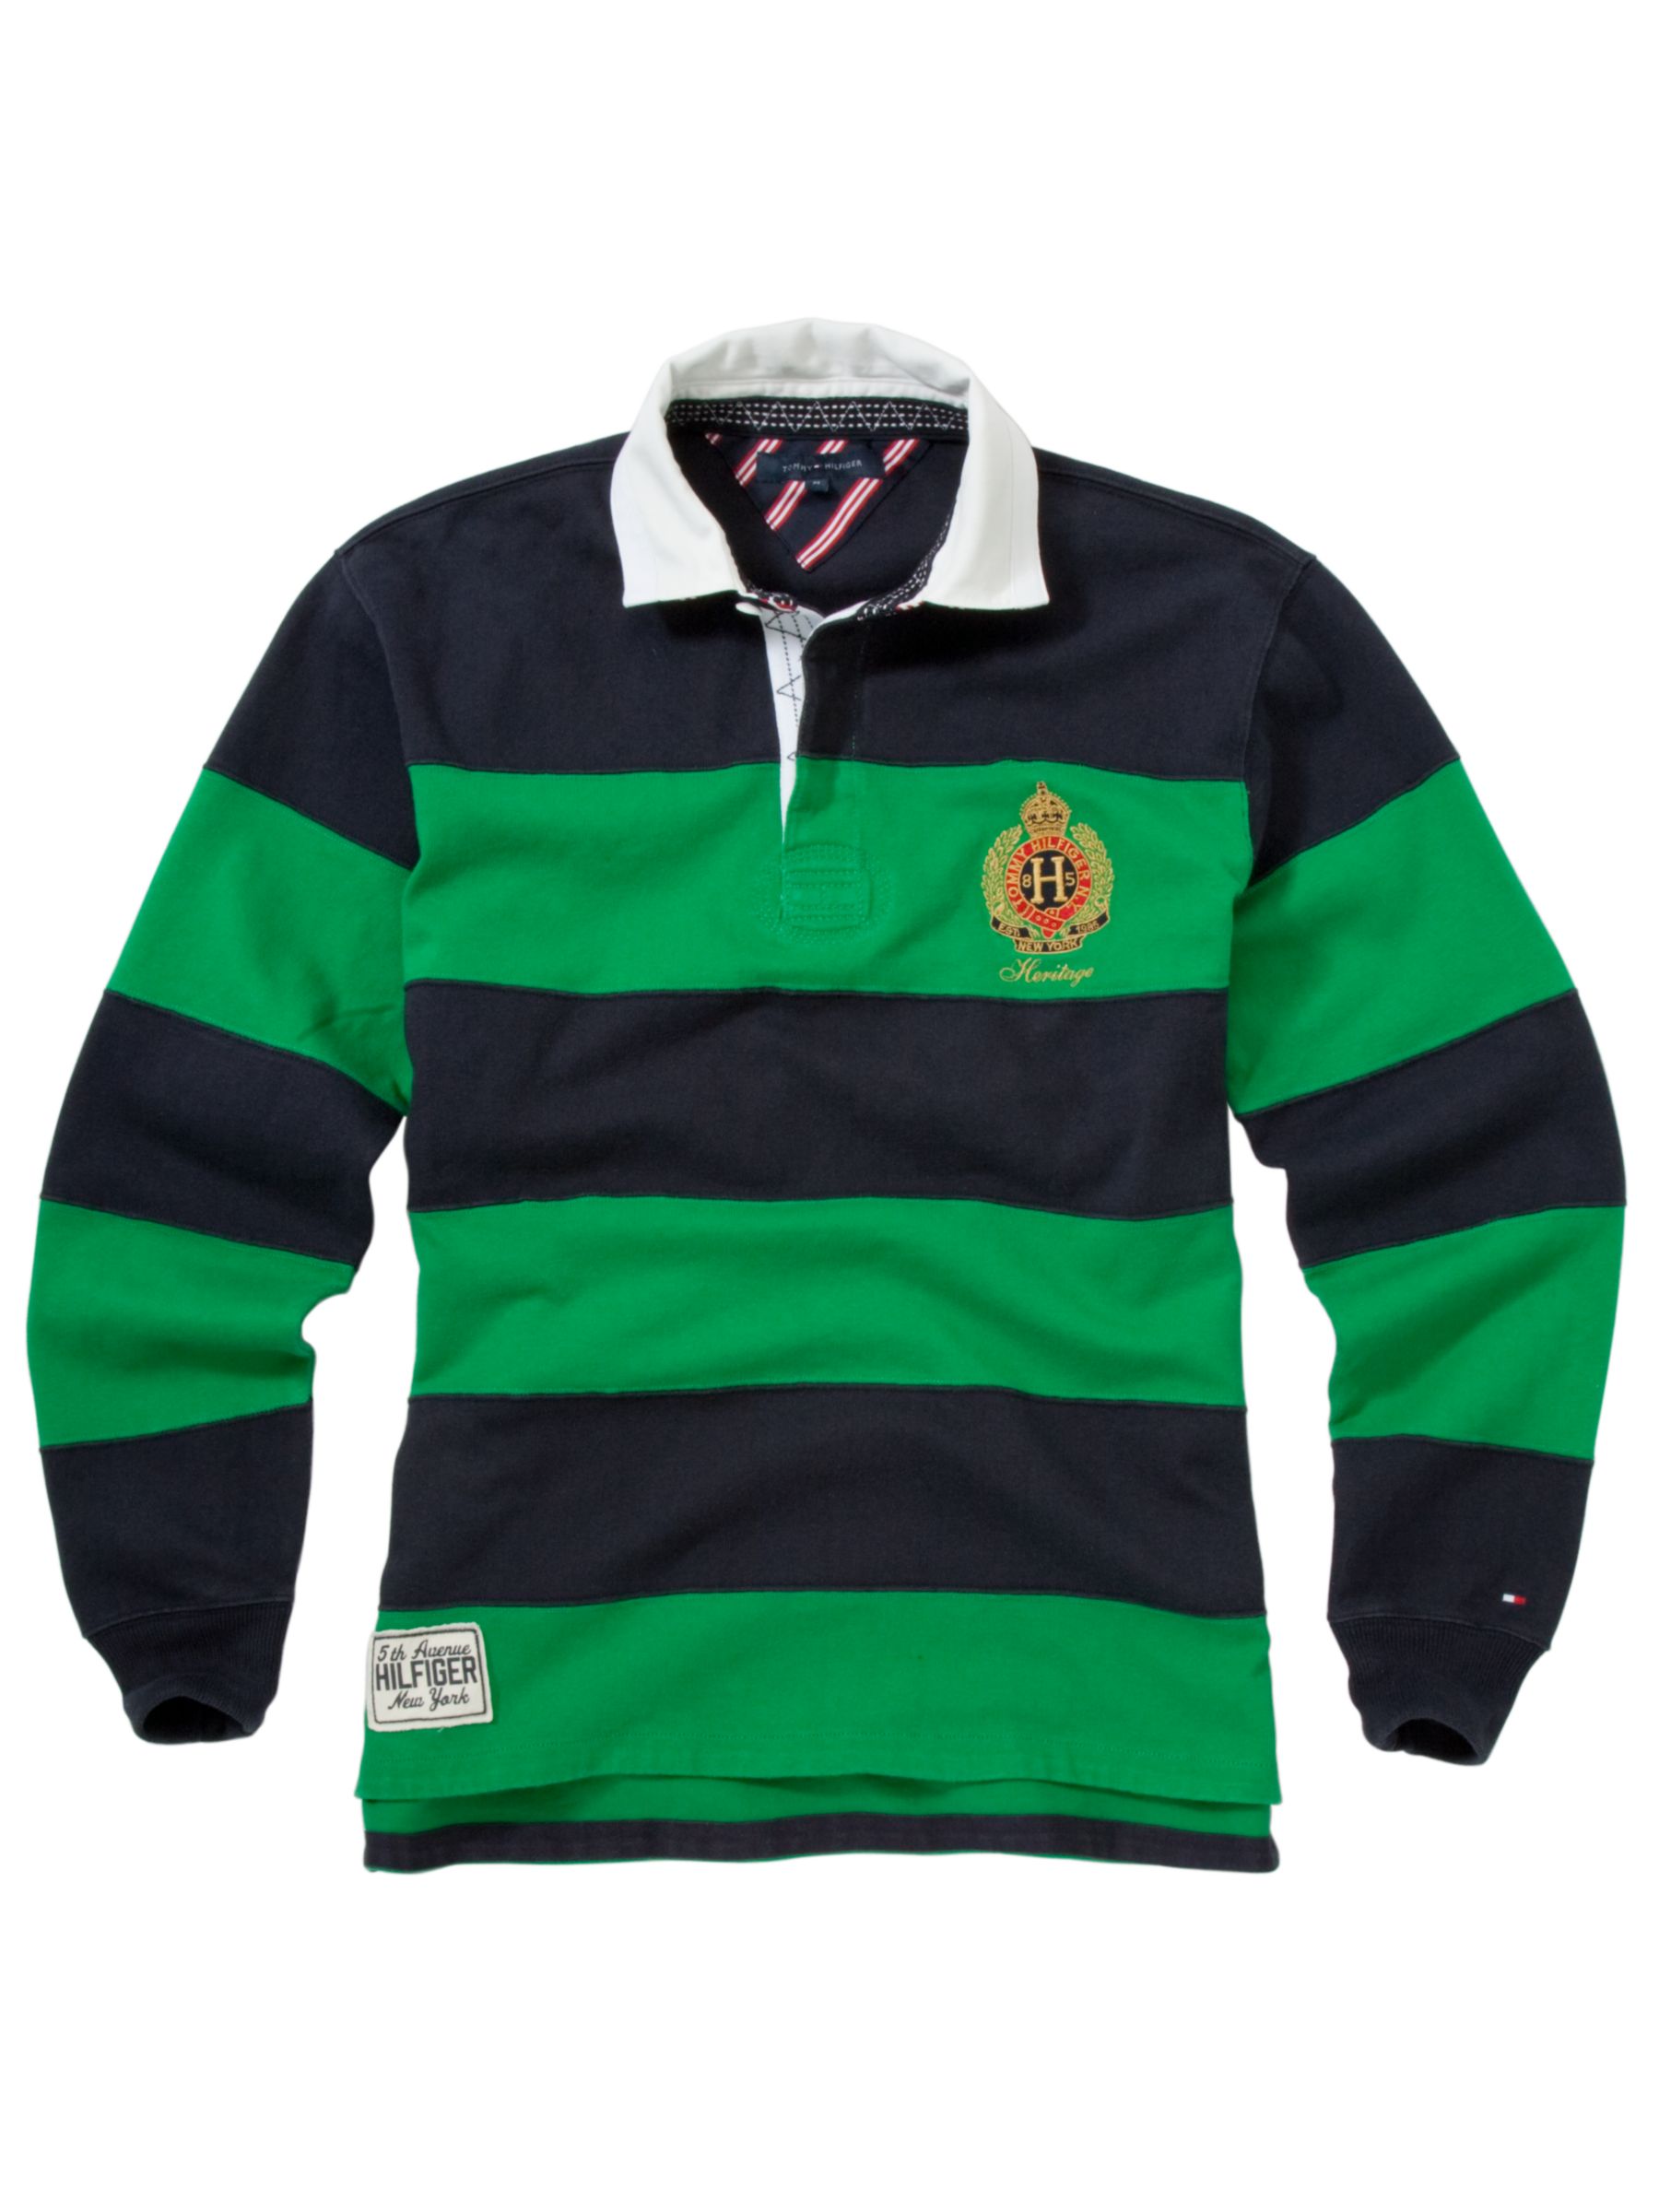 Tommy Hilfiger Piero Rugby Shirt, Green/Black